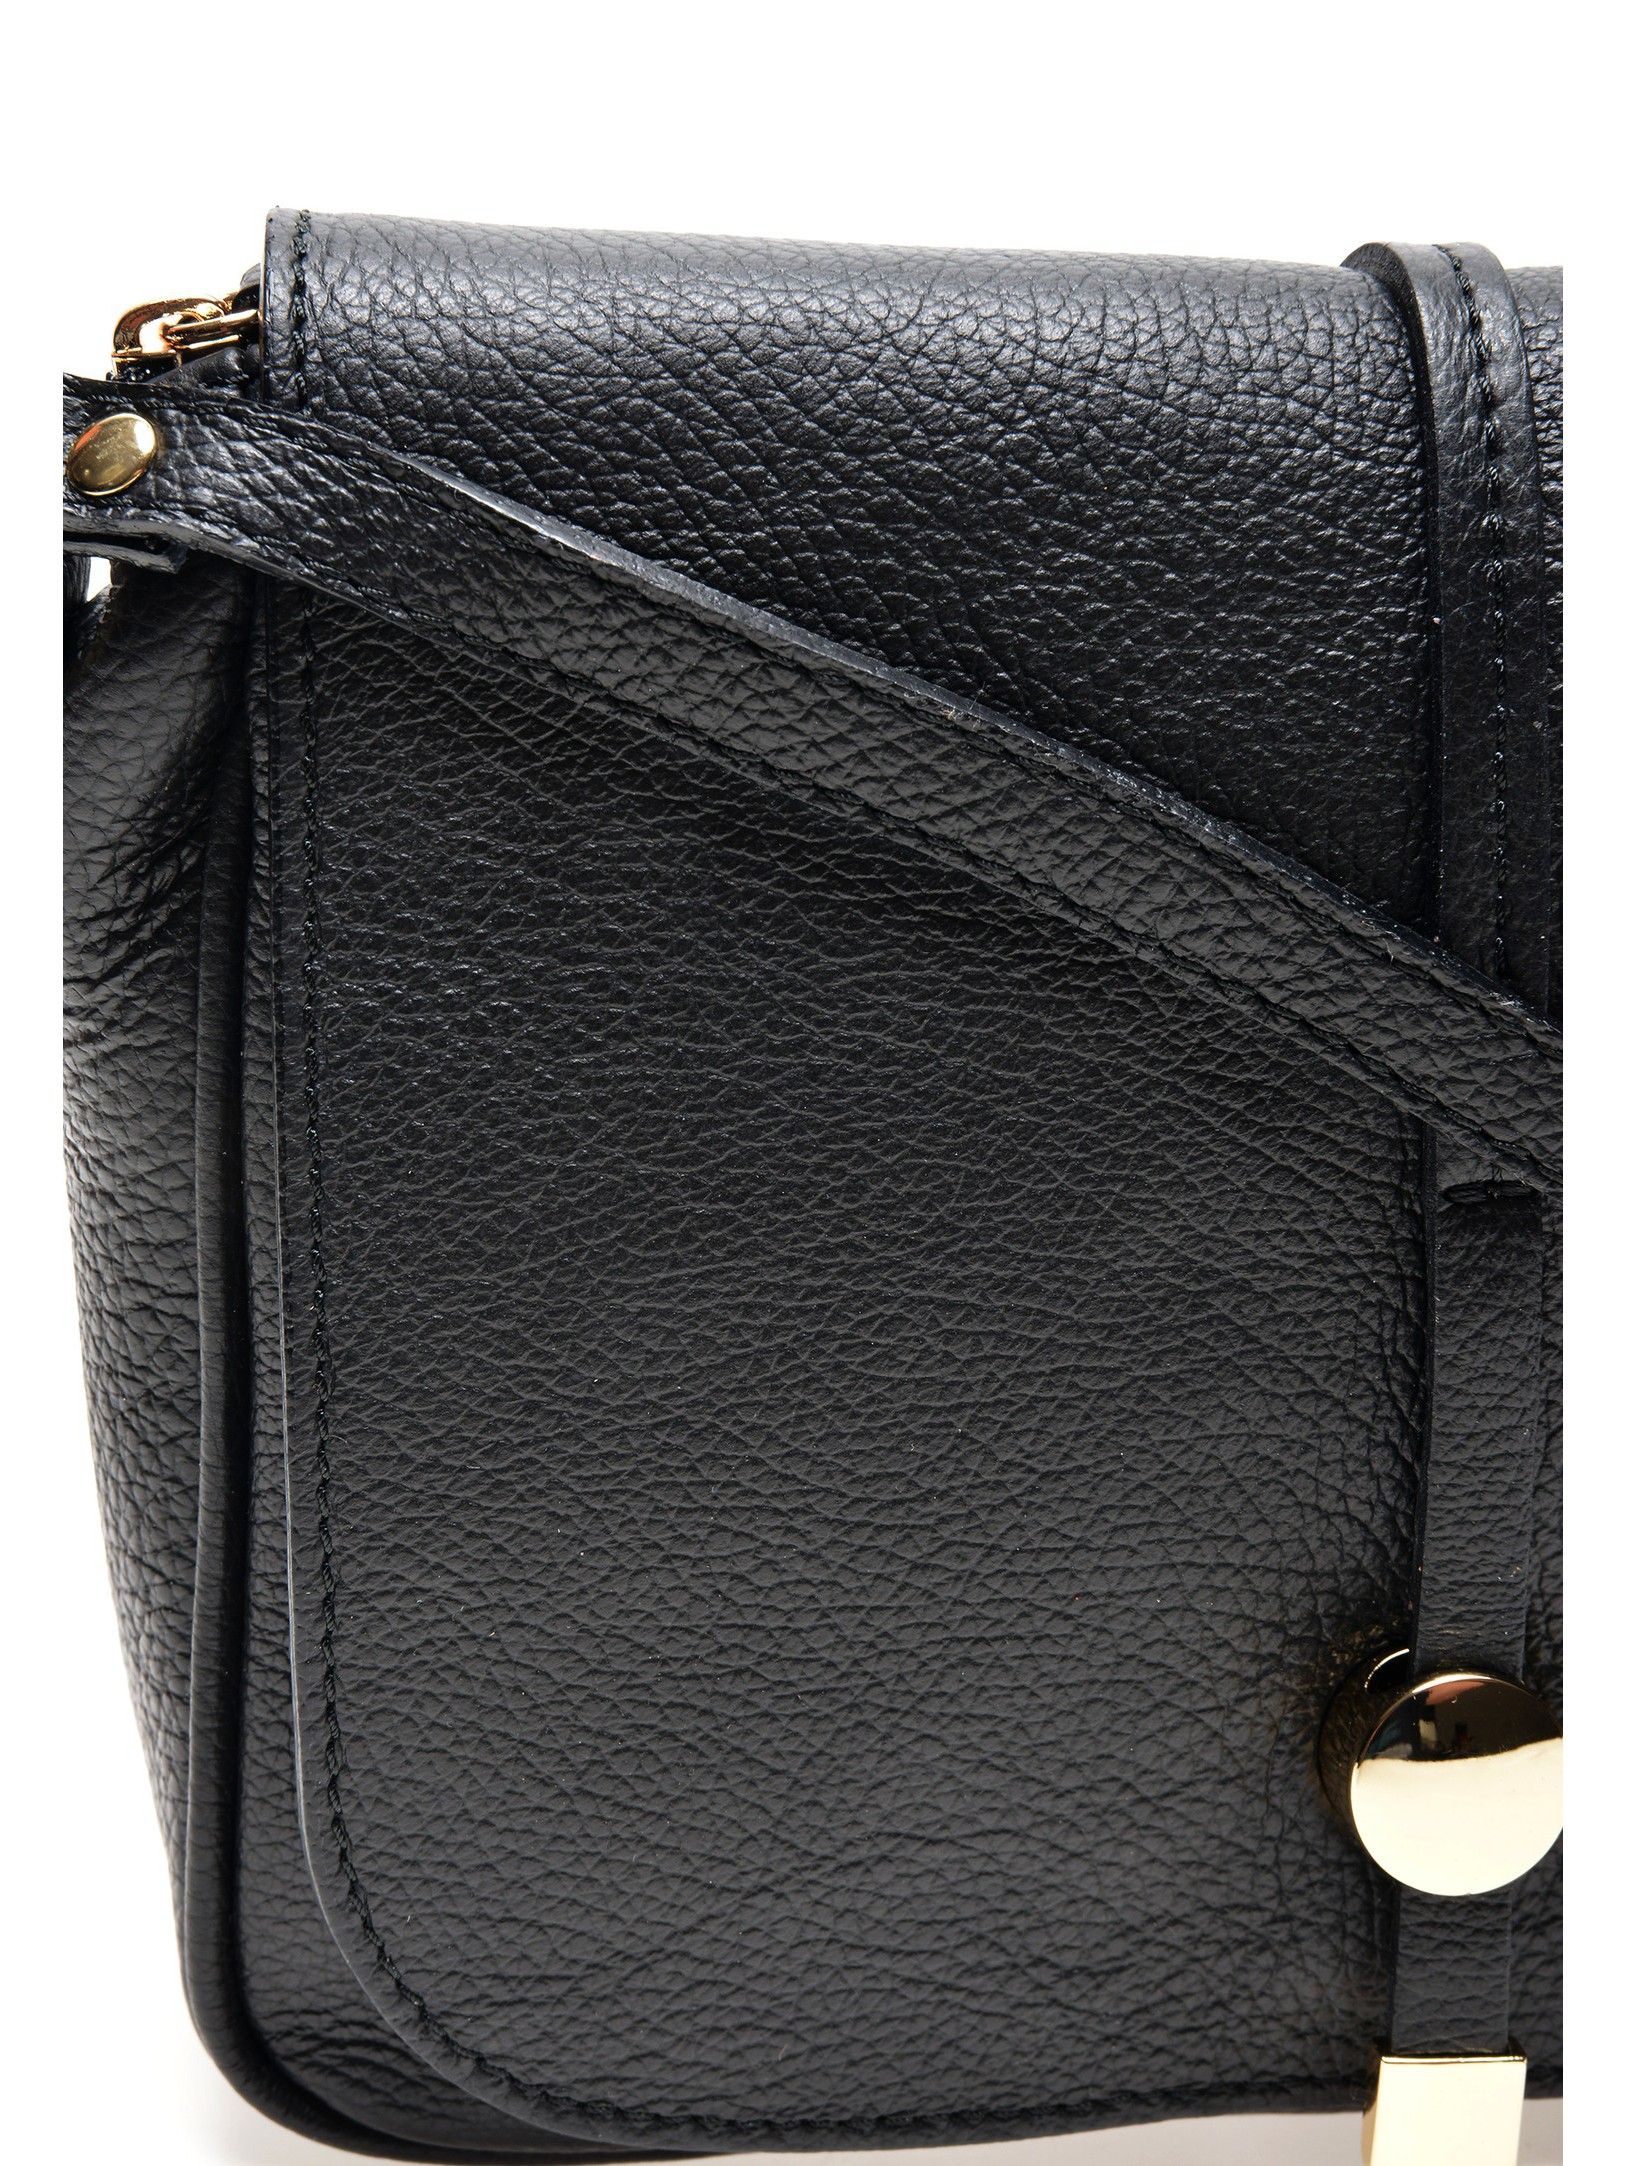 Shoulder Bag
100% cow leather
Flap over closure with internal zip
Internal zip pocket
Back zip pocket
Detachable shoulder strap: 120 cm
Dimensions (L): 21x25x6cm